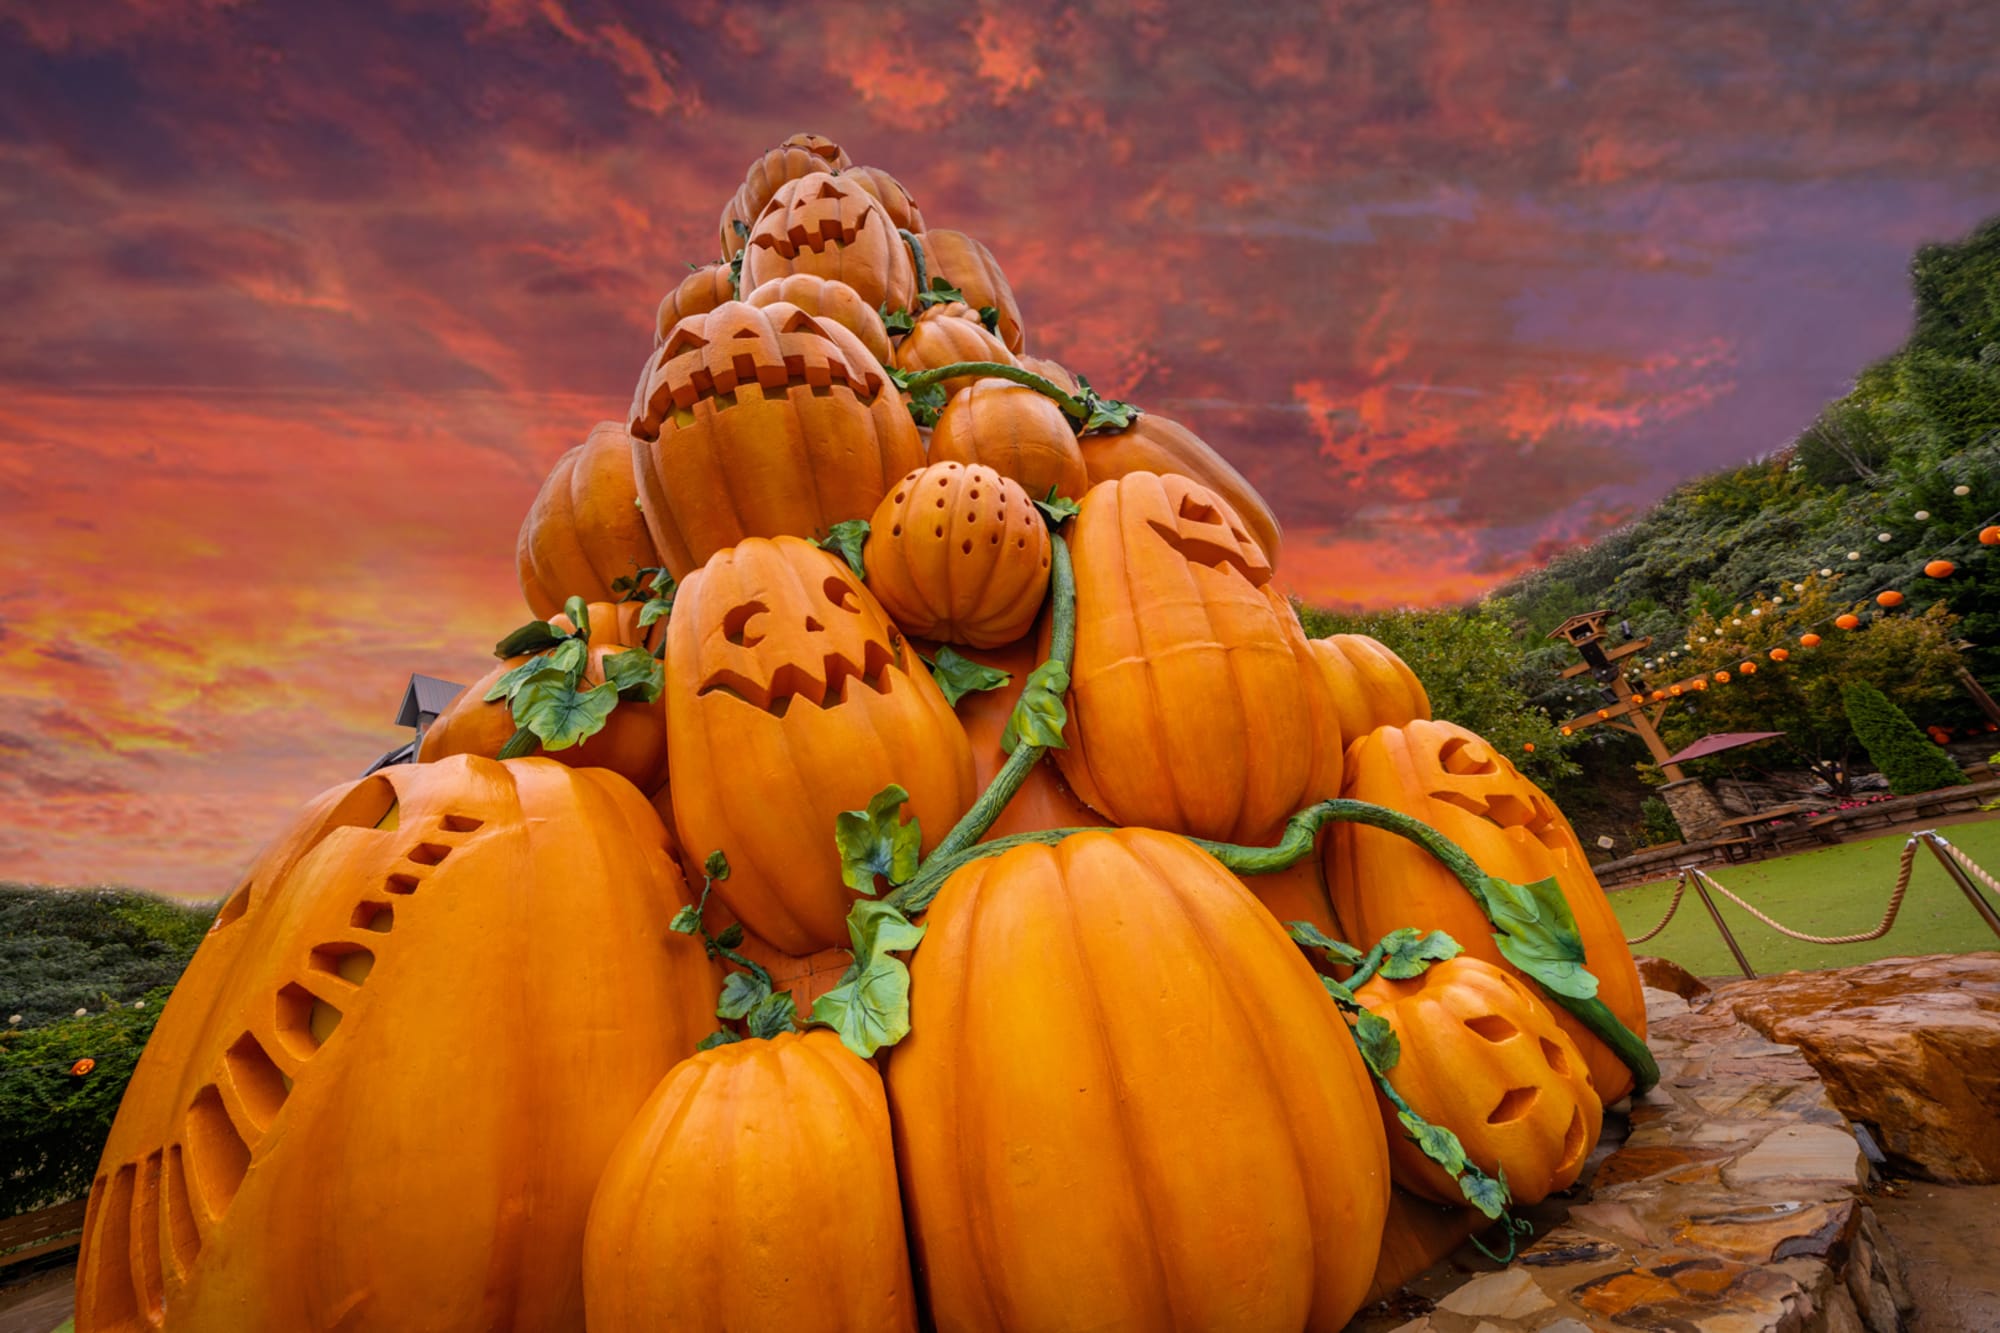 Dollywood Harvest Festival celebrates the vibrant autumn atmosphere